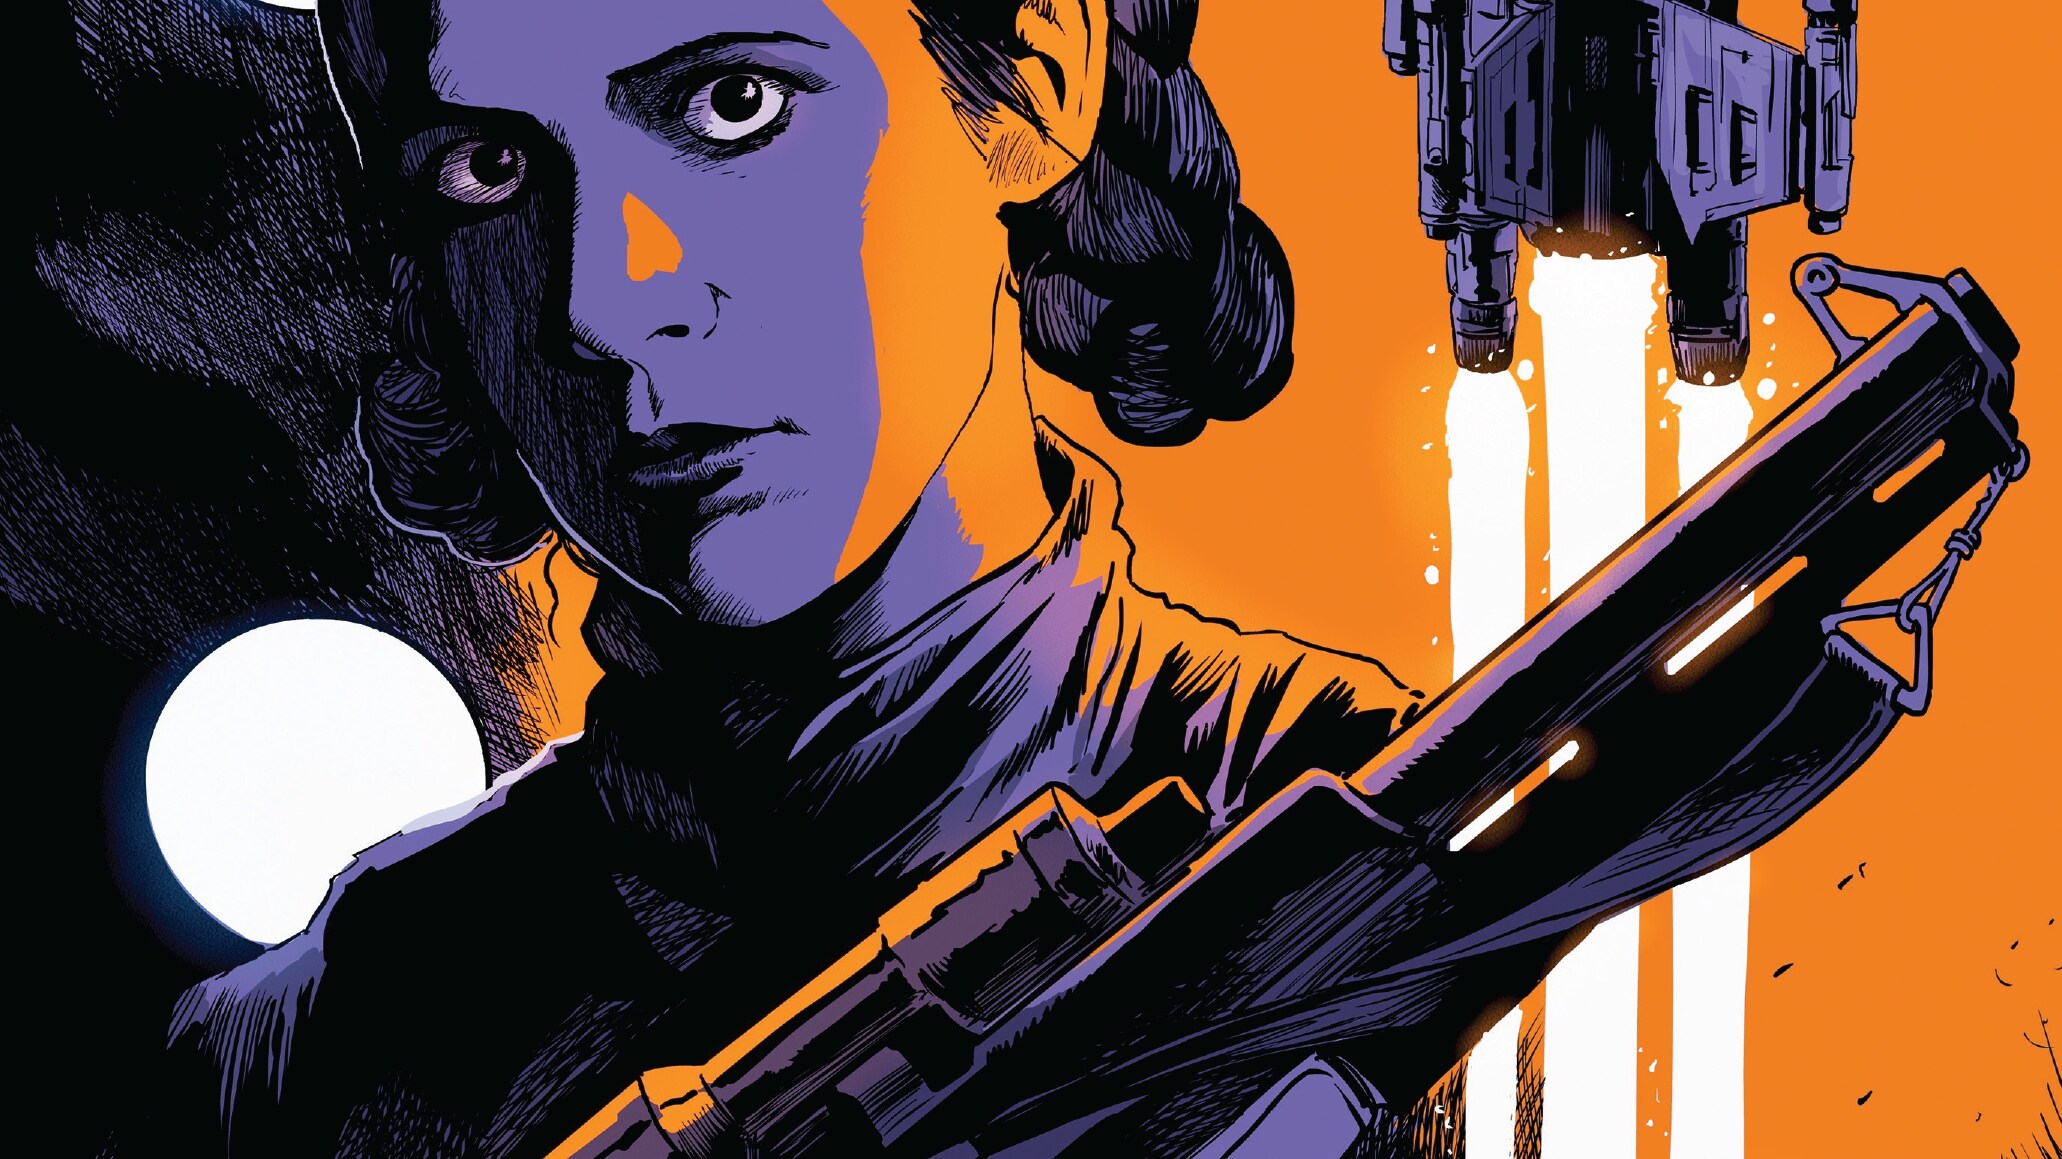 Princess Leia #3 - Exclusive Preview!